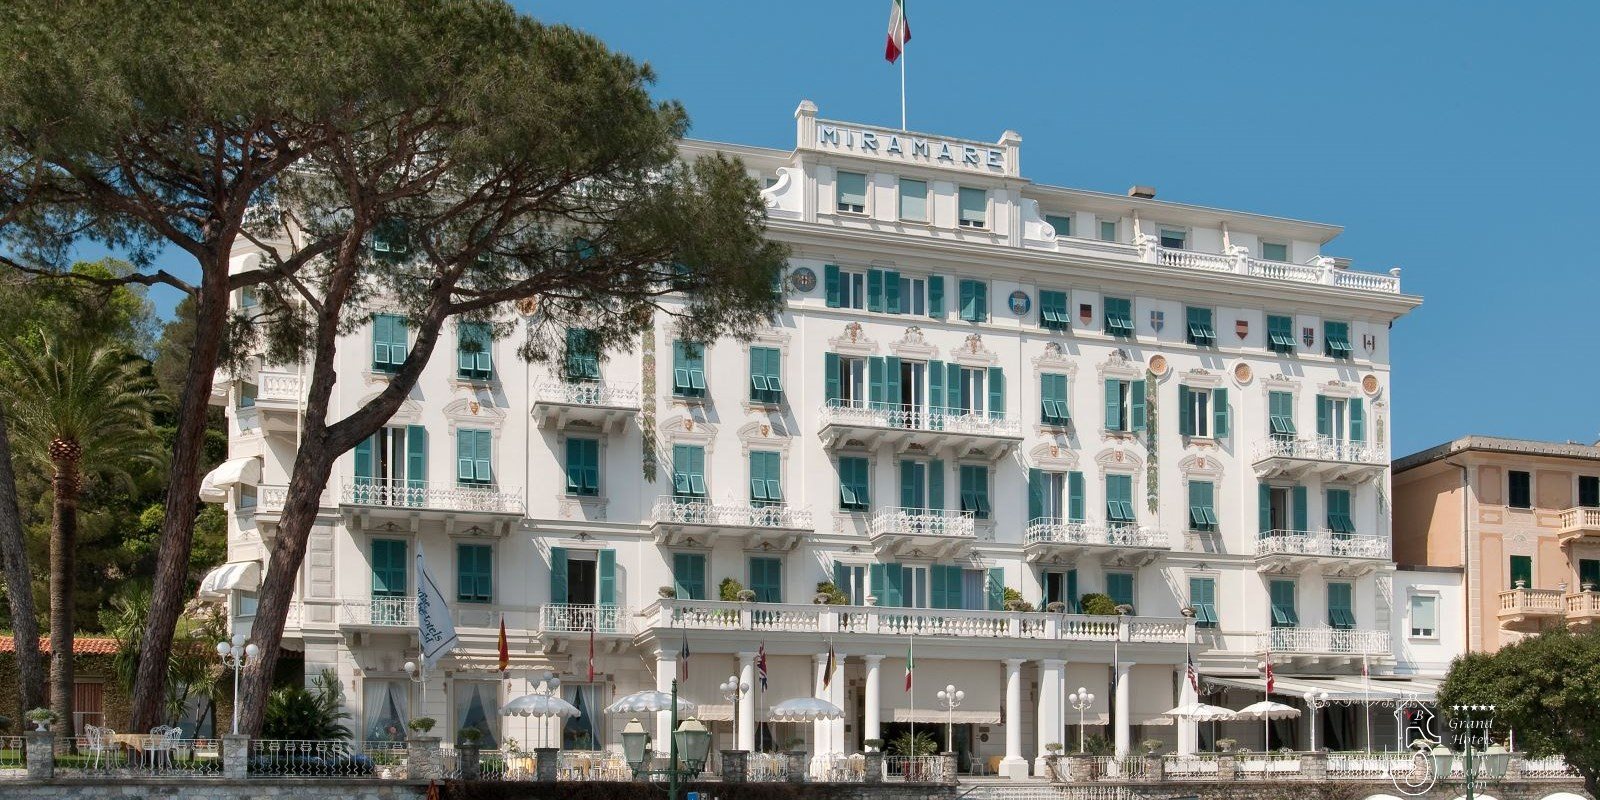 Grand Hotel Miramare in Santa Margherita Ligure